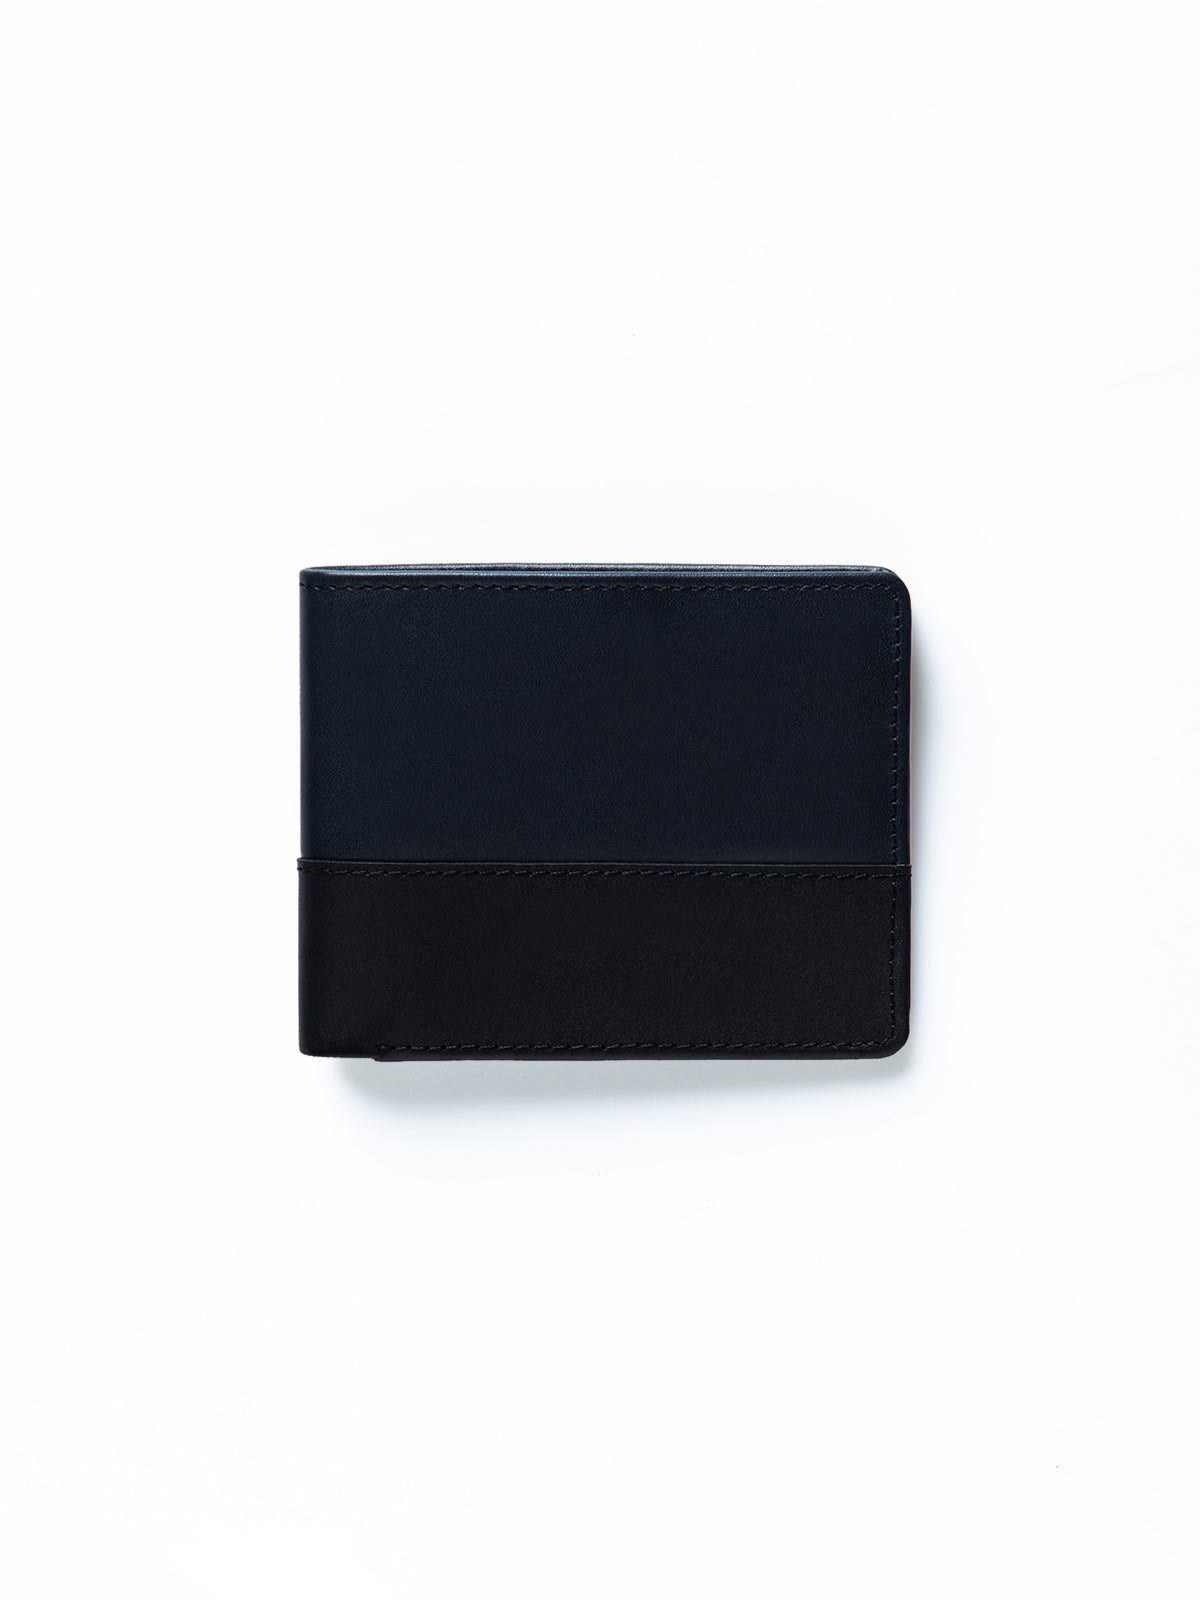 Black & Navy Blue Leather Wallet - FAMW23-009